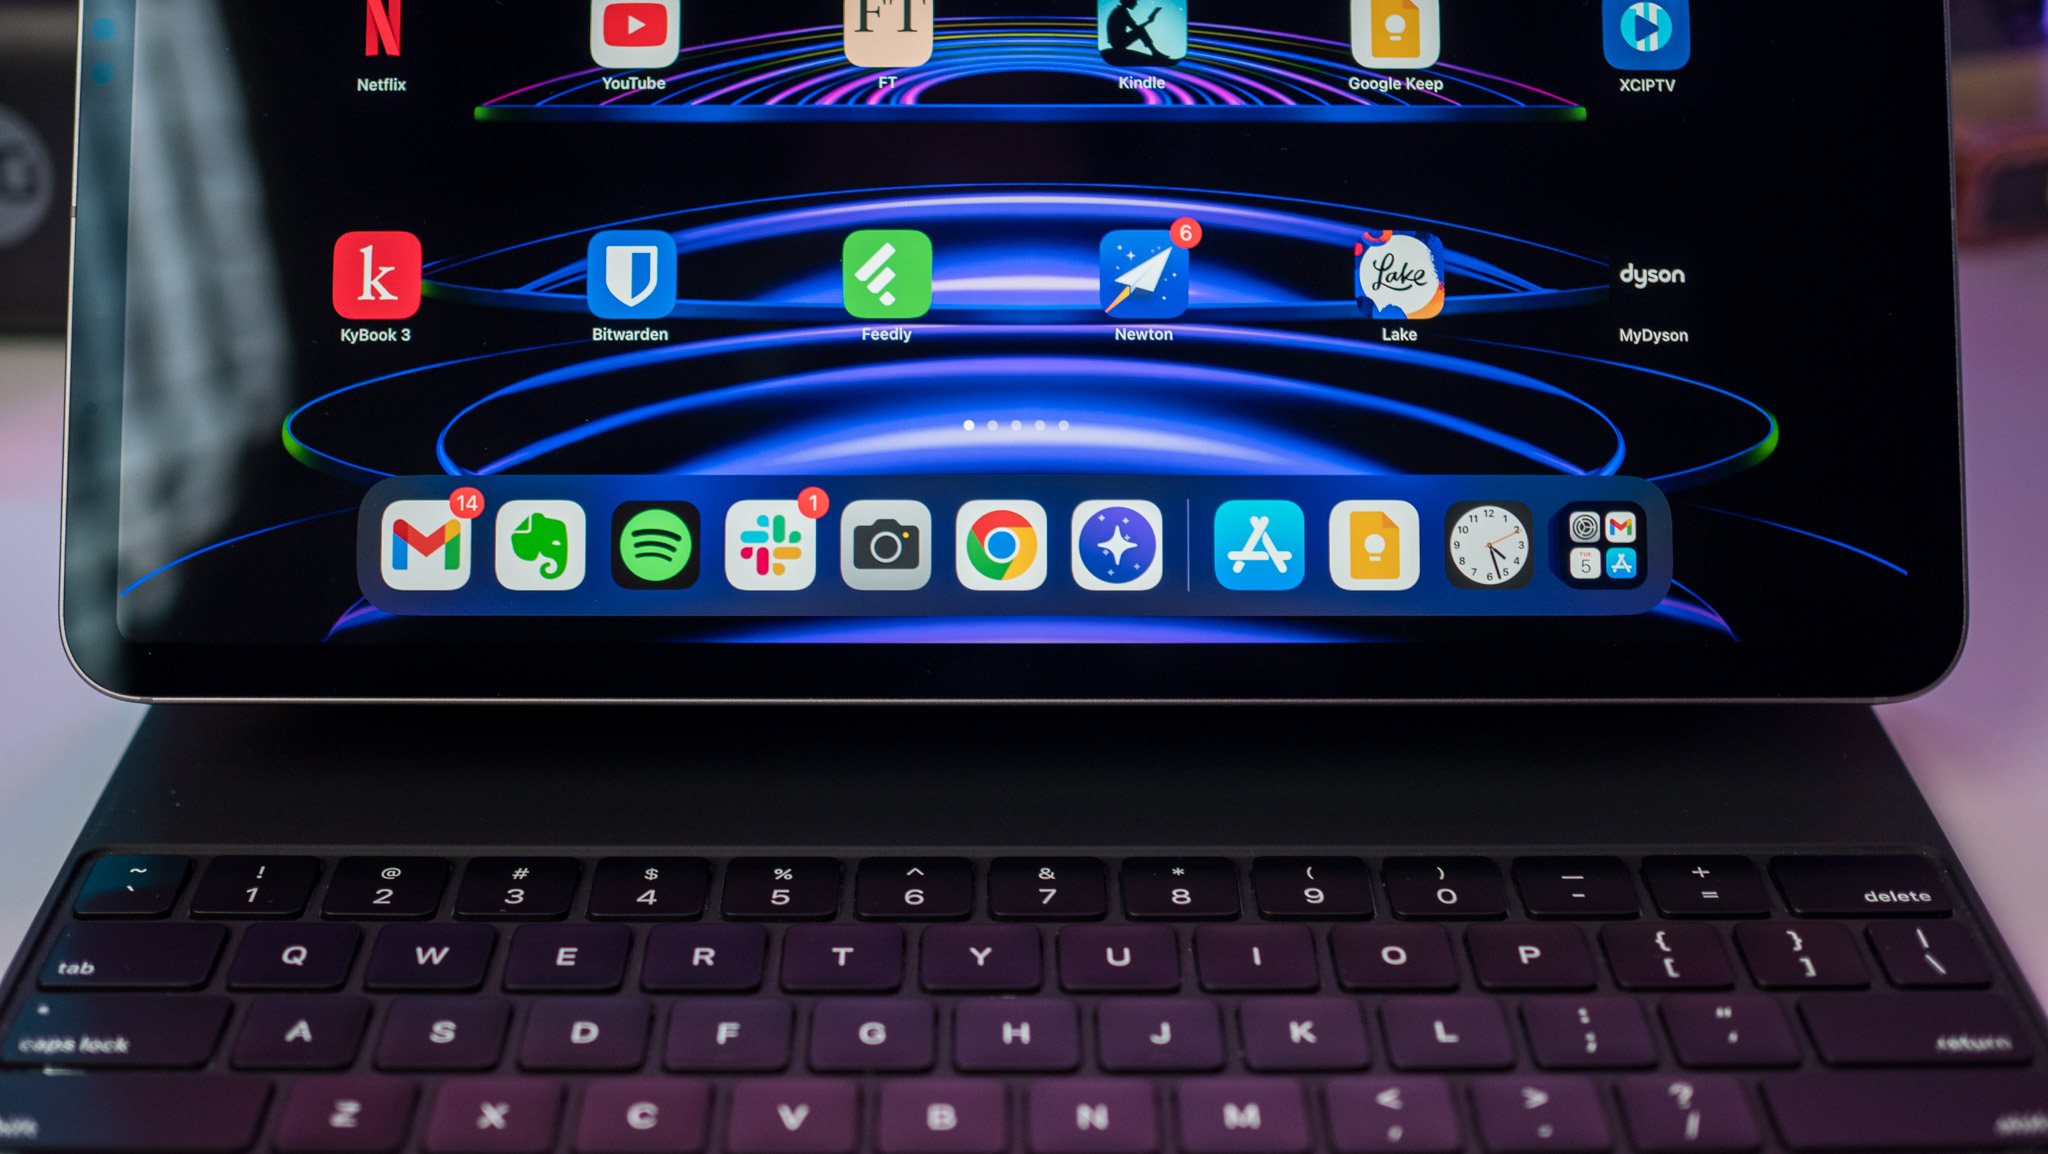 The iPad Pro 12.9 has transformed how I work